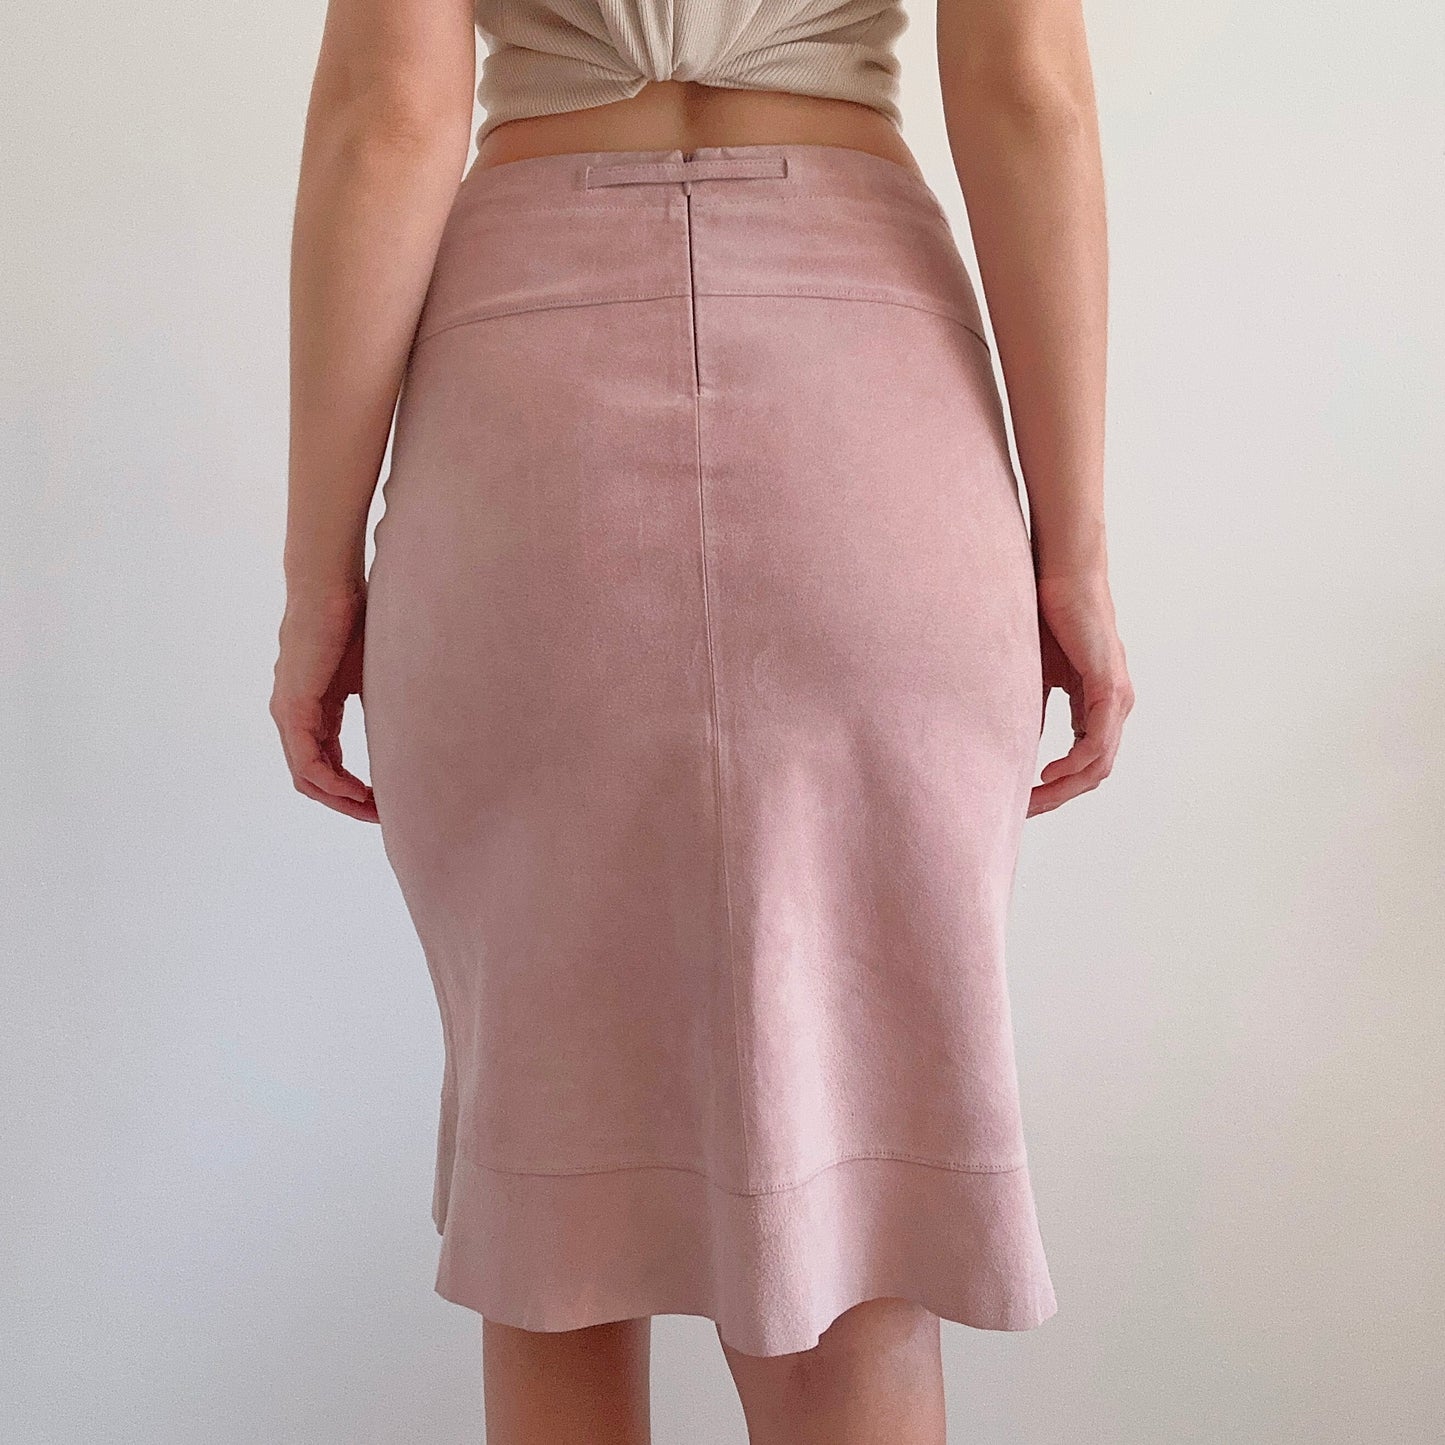 Y2K Pale Pink Suede Midi Skirt / SZ XS/S